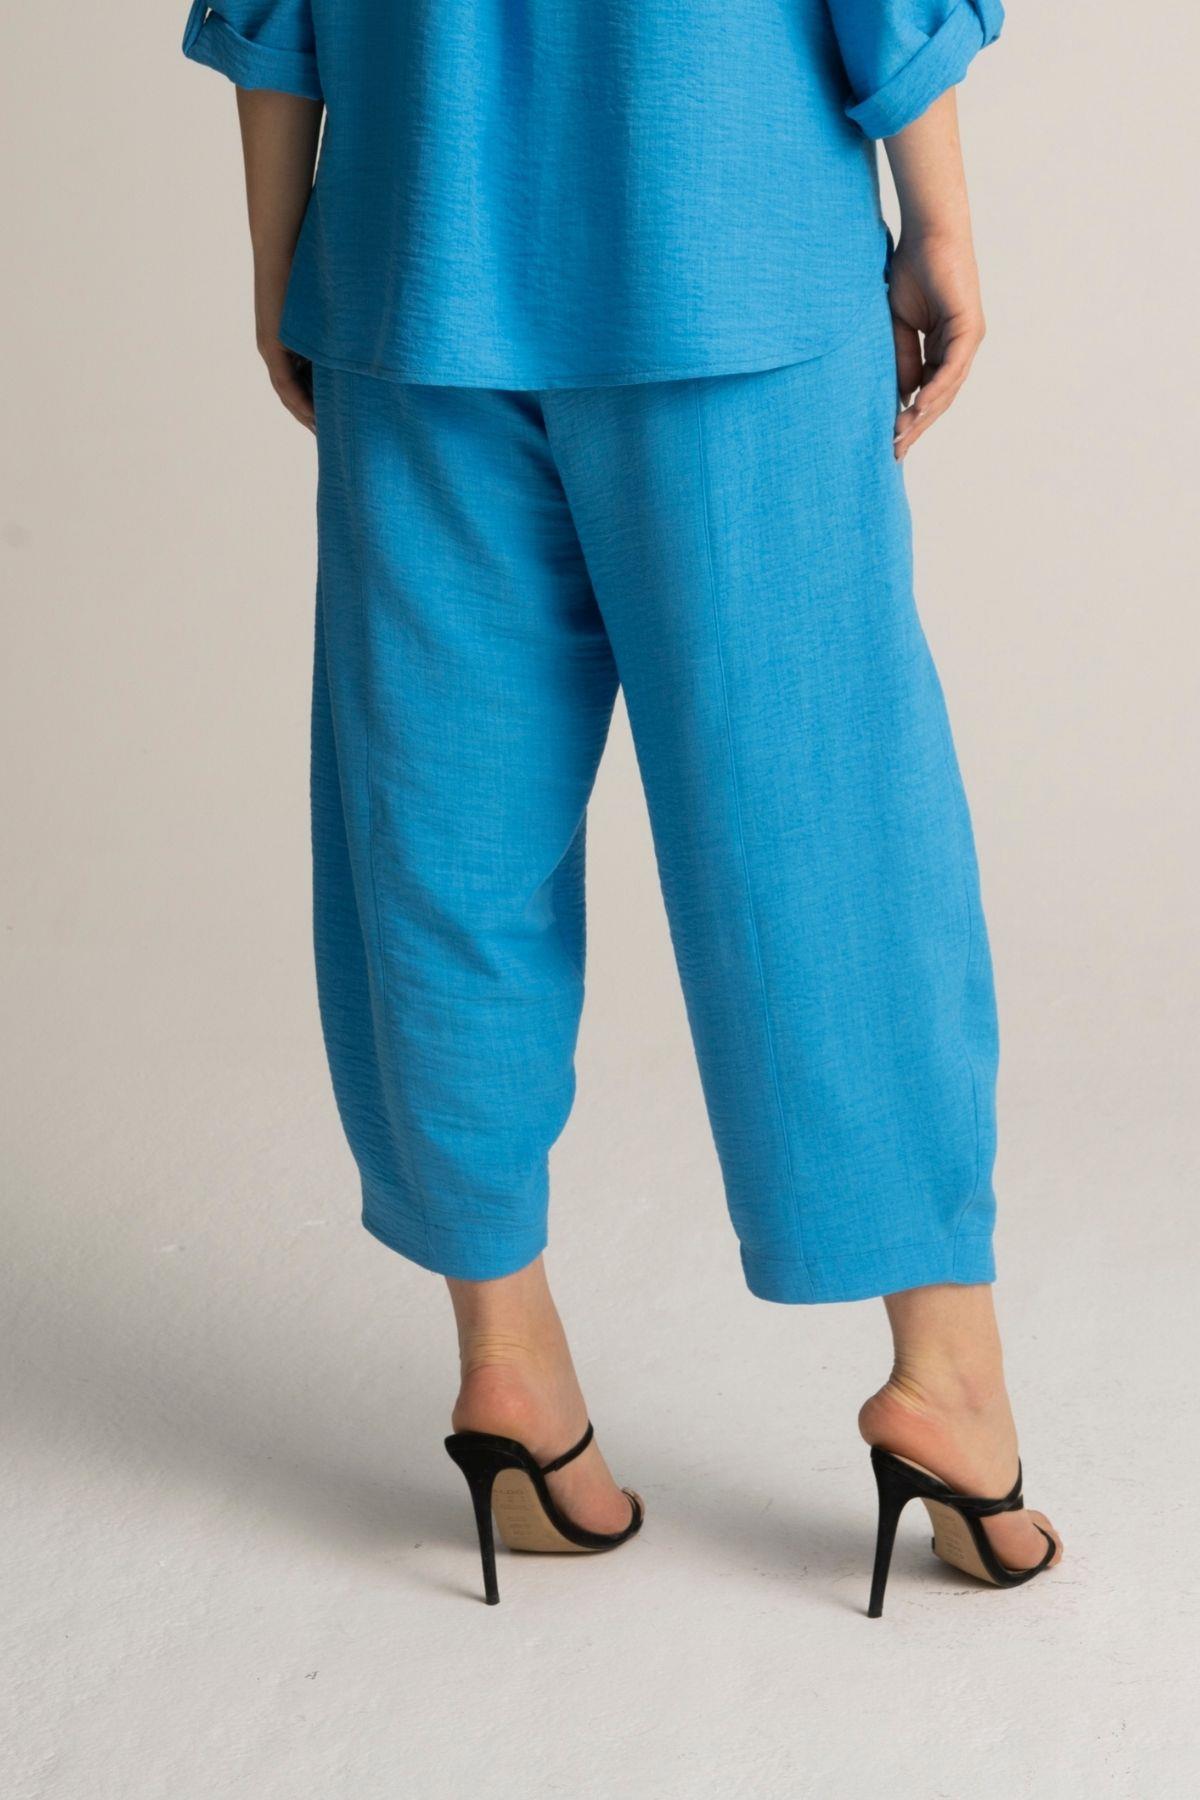 Kadın Mavi Renk Keten Pantolon